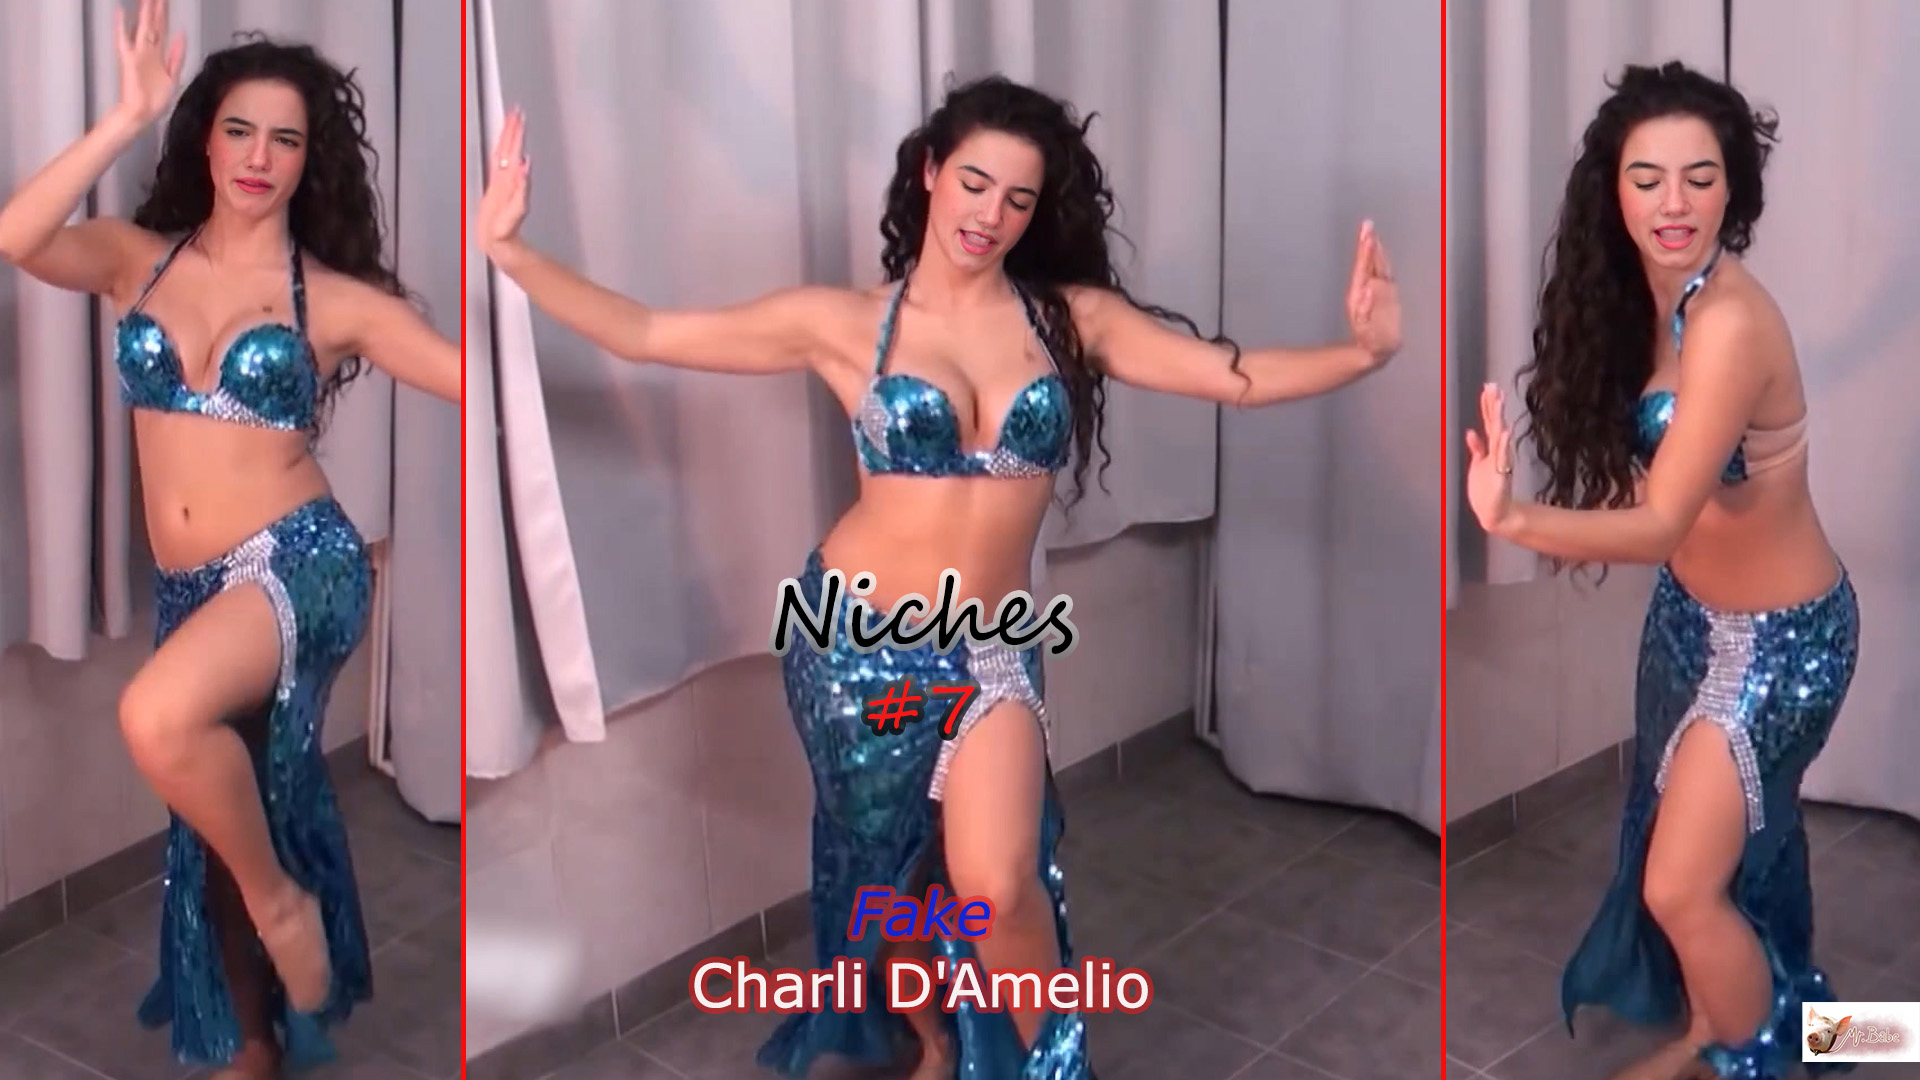 Fake Charli D'Amelio -(Full) -'Niches' #7 / Free Download